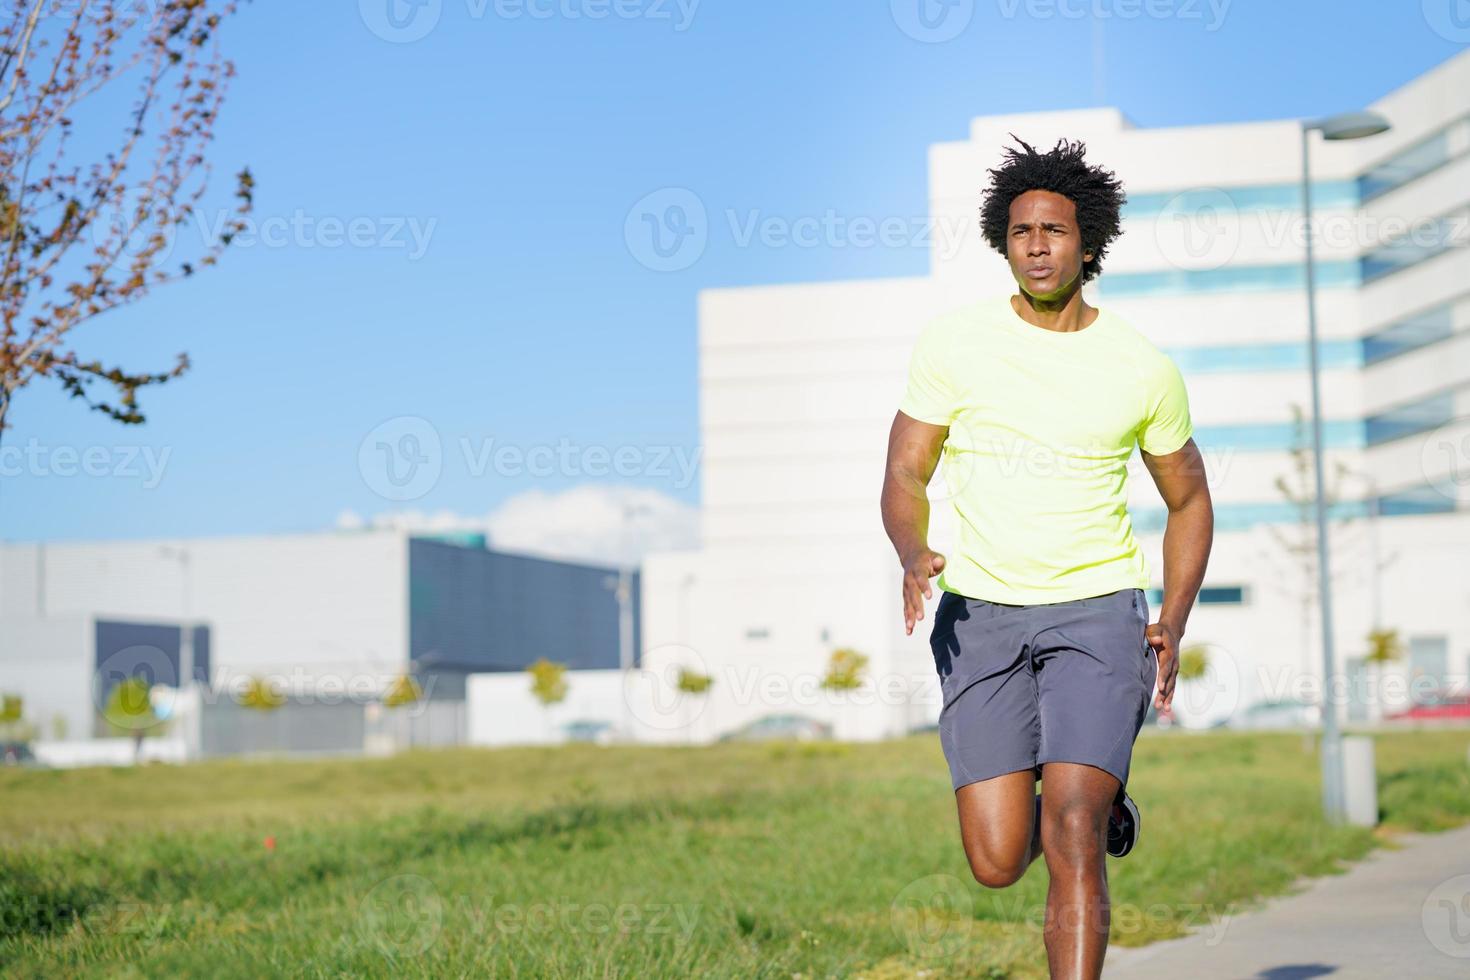 Black athletic man running in an urban park. photo